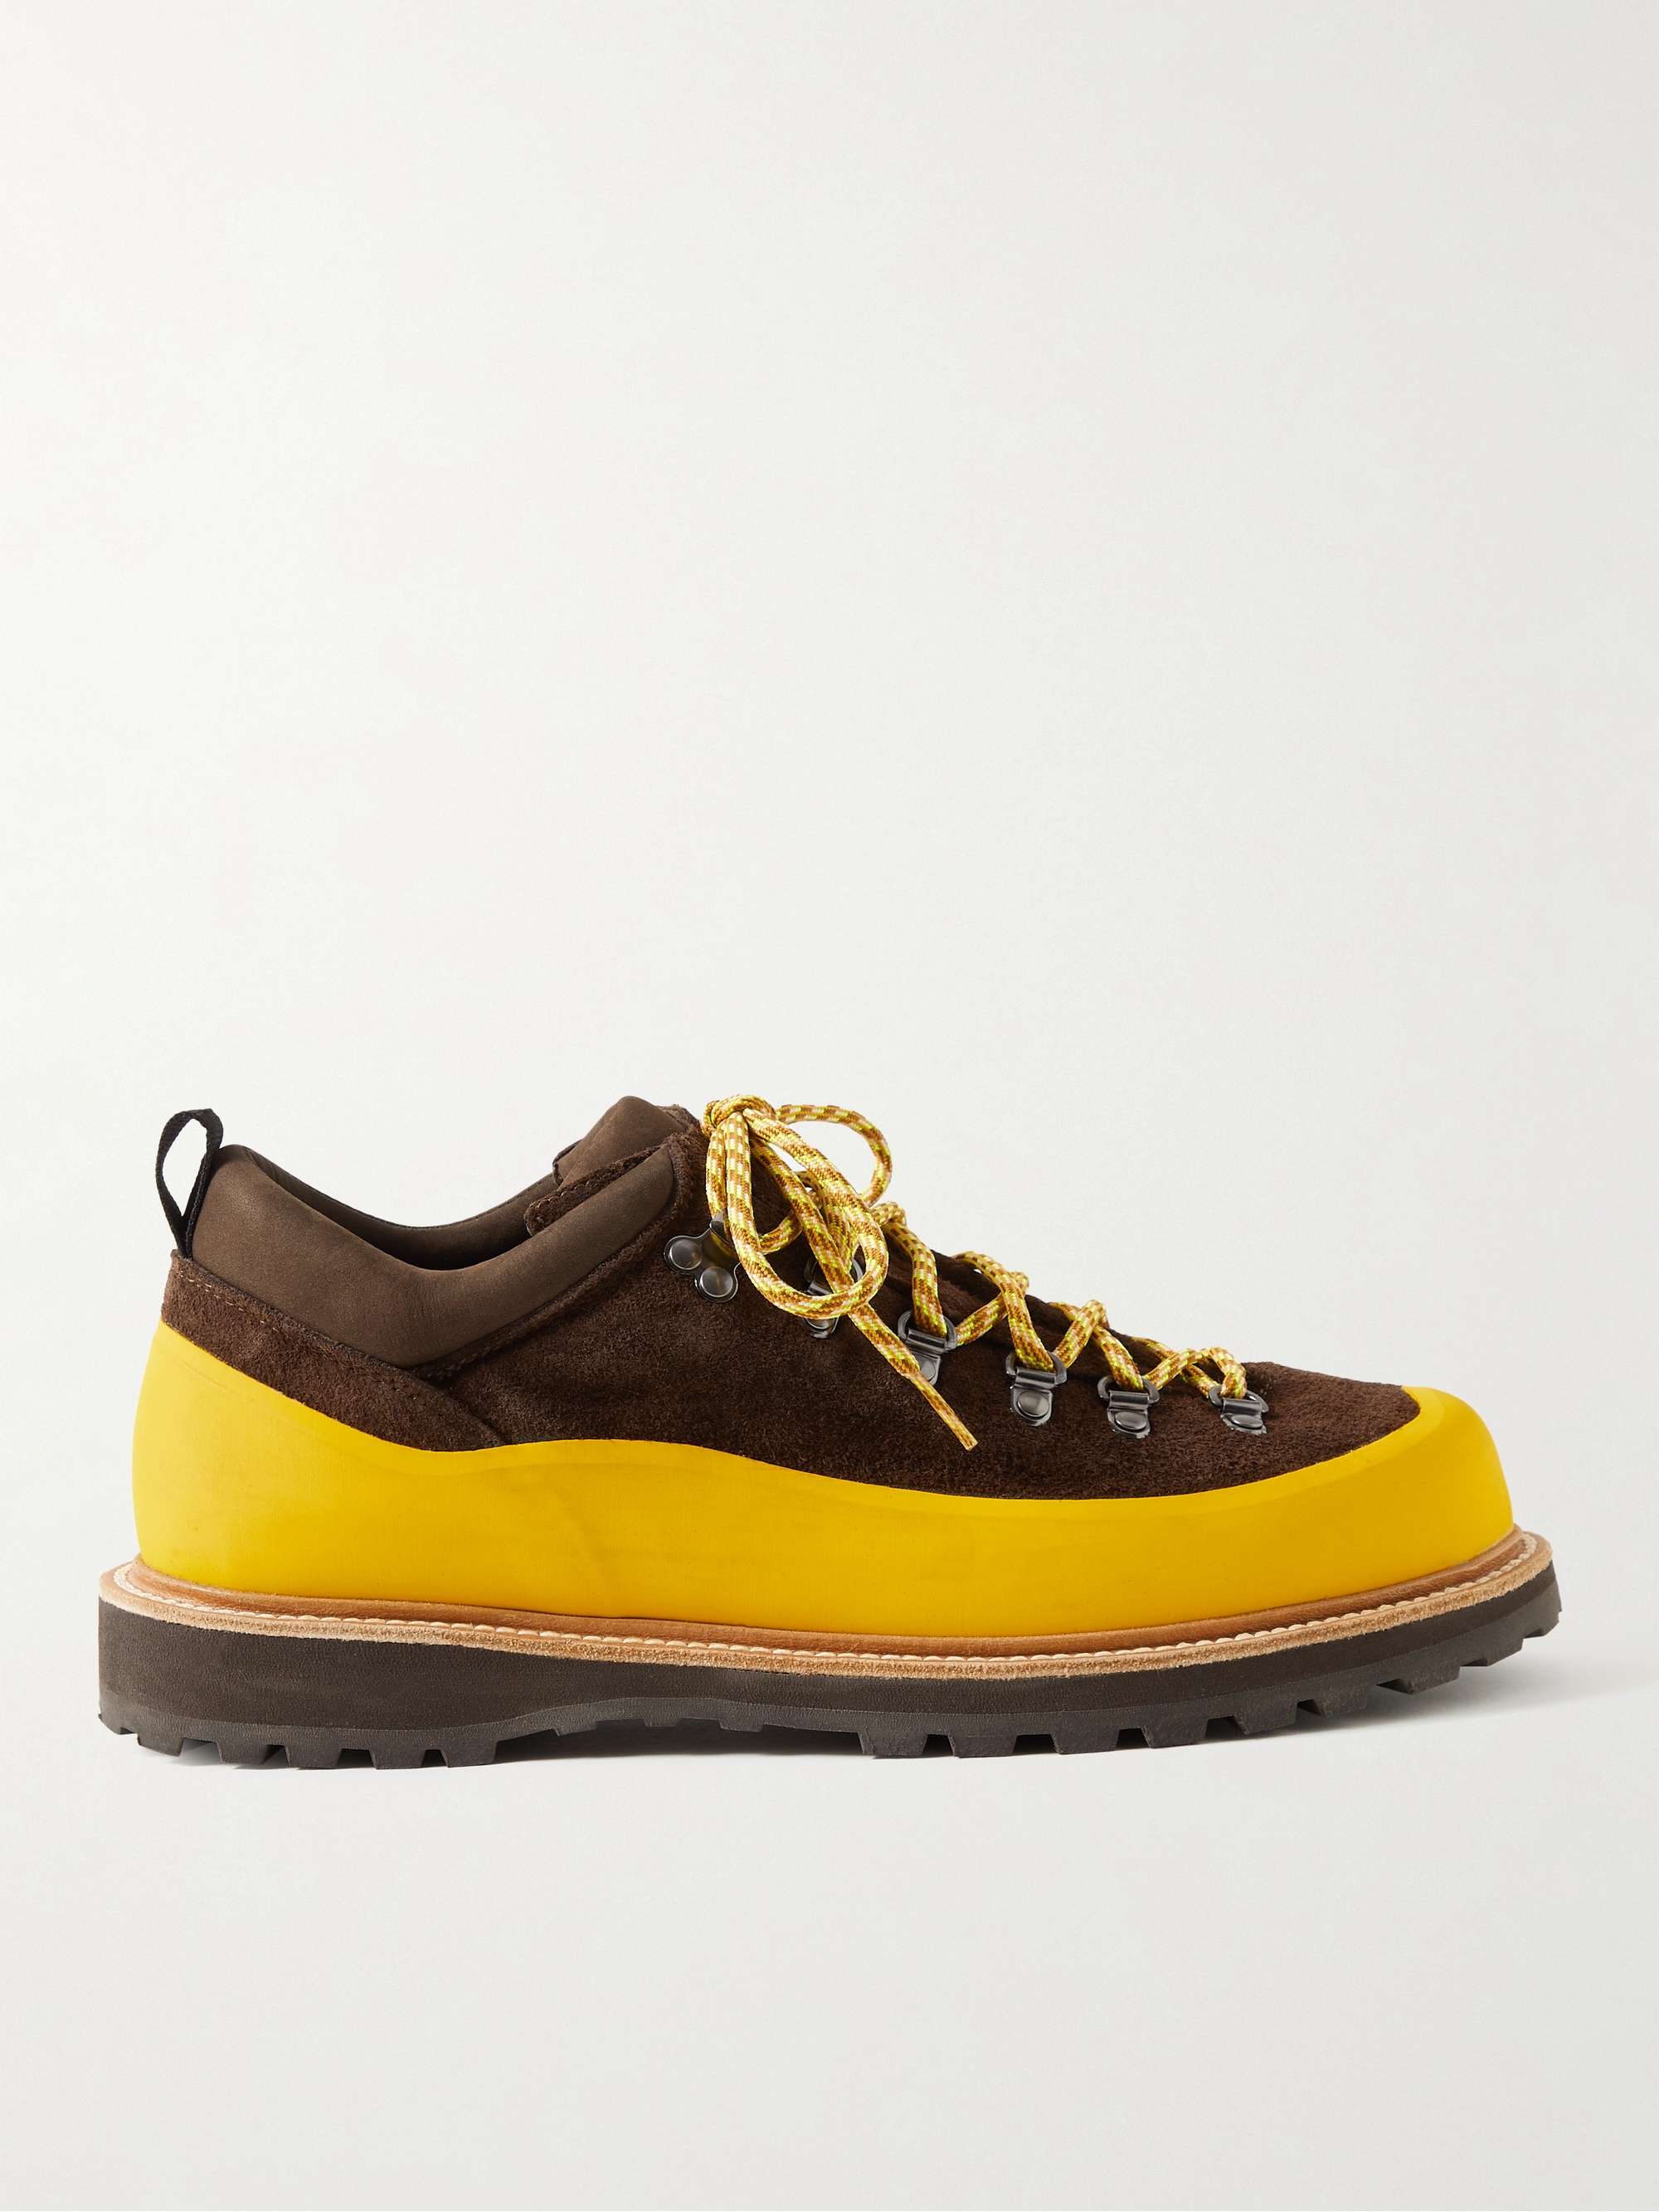 DIEMME Roccia Basso Rubber-Trimmed Suede Hiking Boots for Men | MR